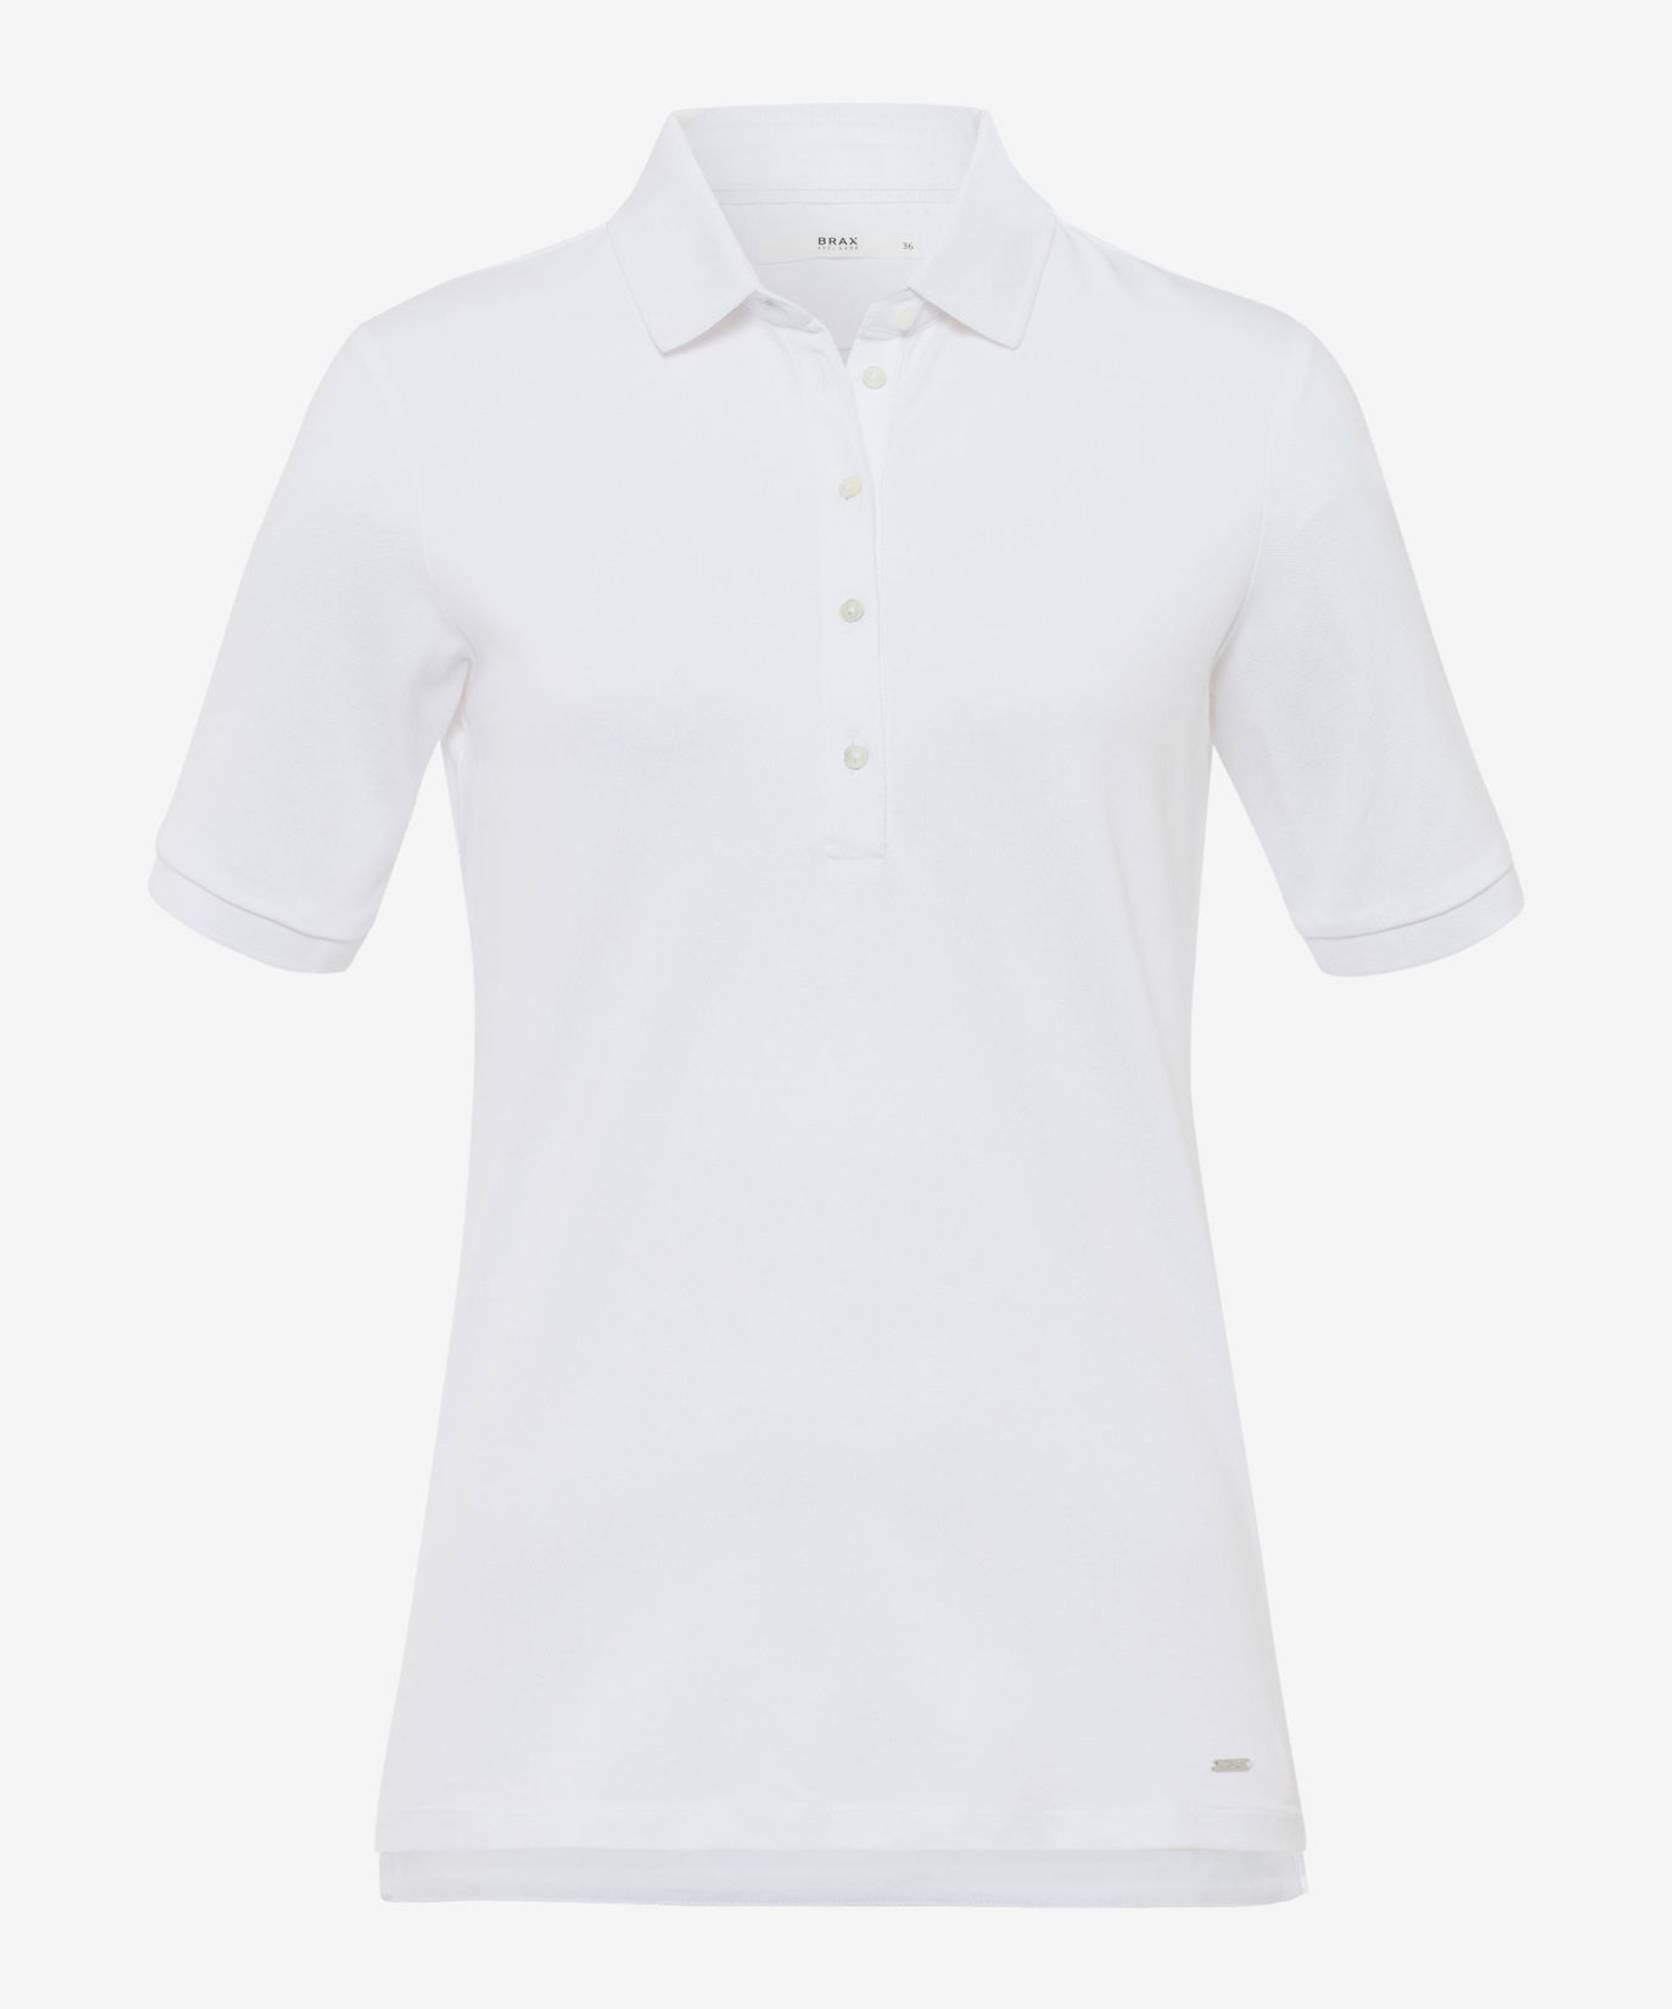 White Modern-sportive T-Shirt (99) Brax 32-3308 Optik